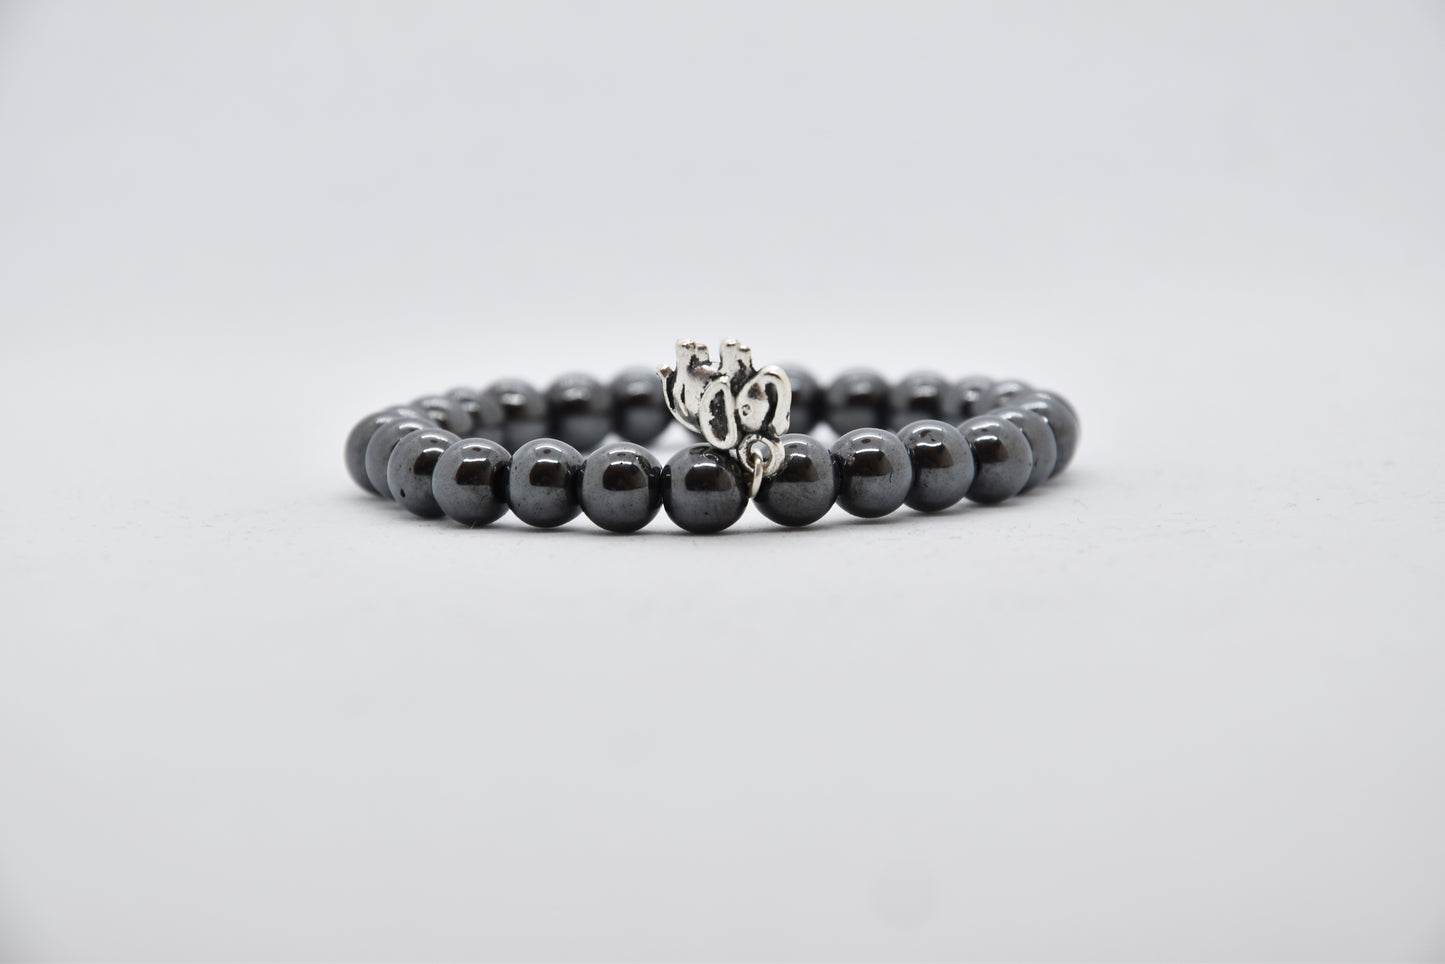 Bead Bracelets with precious gemstones